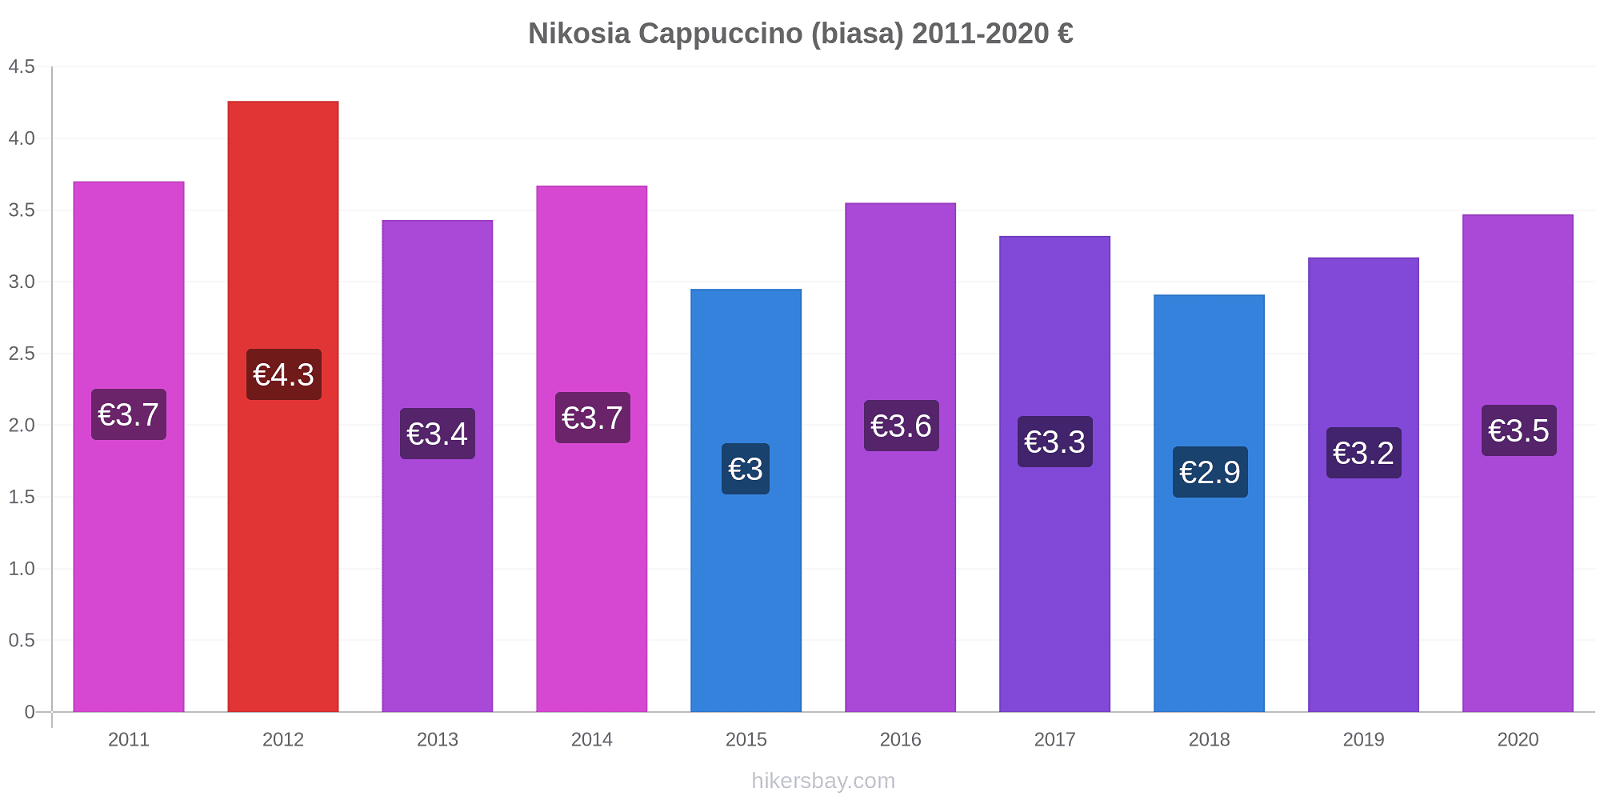 Nikosia perubahan harga Cappuccino (biasa) hikersbay.com